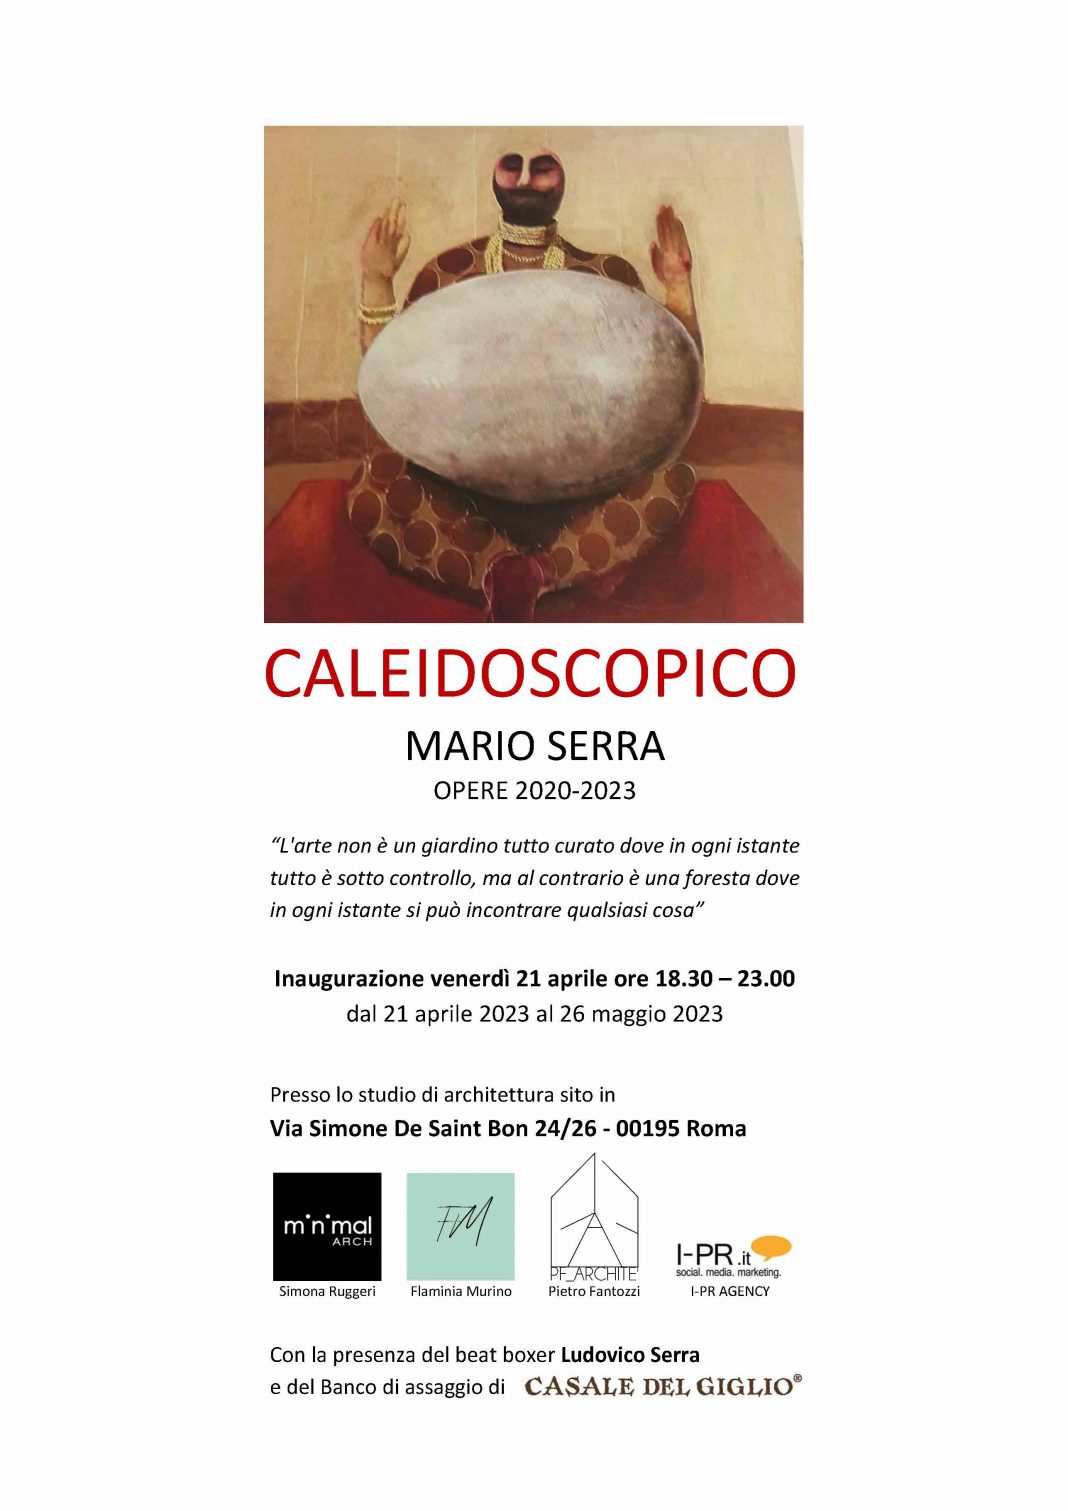 Mario Serra – Caleidoscopicohttps://www.exibart.com/repository/media/formidable/11/img/bca/MARIO-SERRA-LOCANDINA-1068x1511.jpg